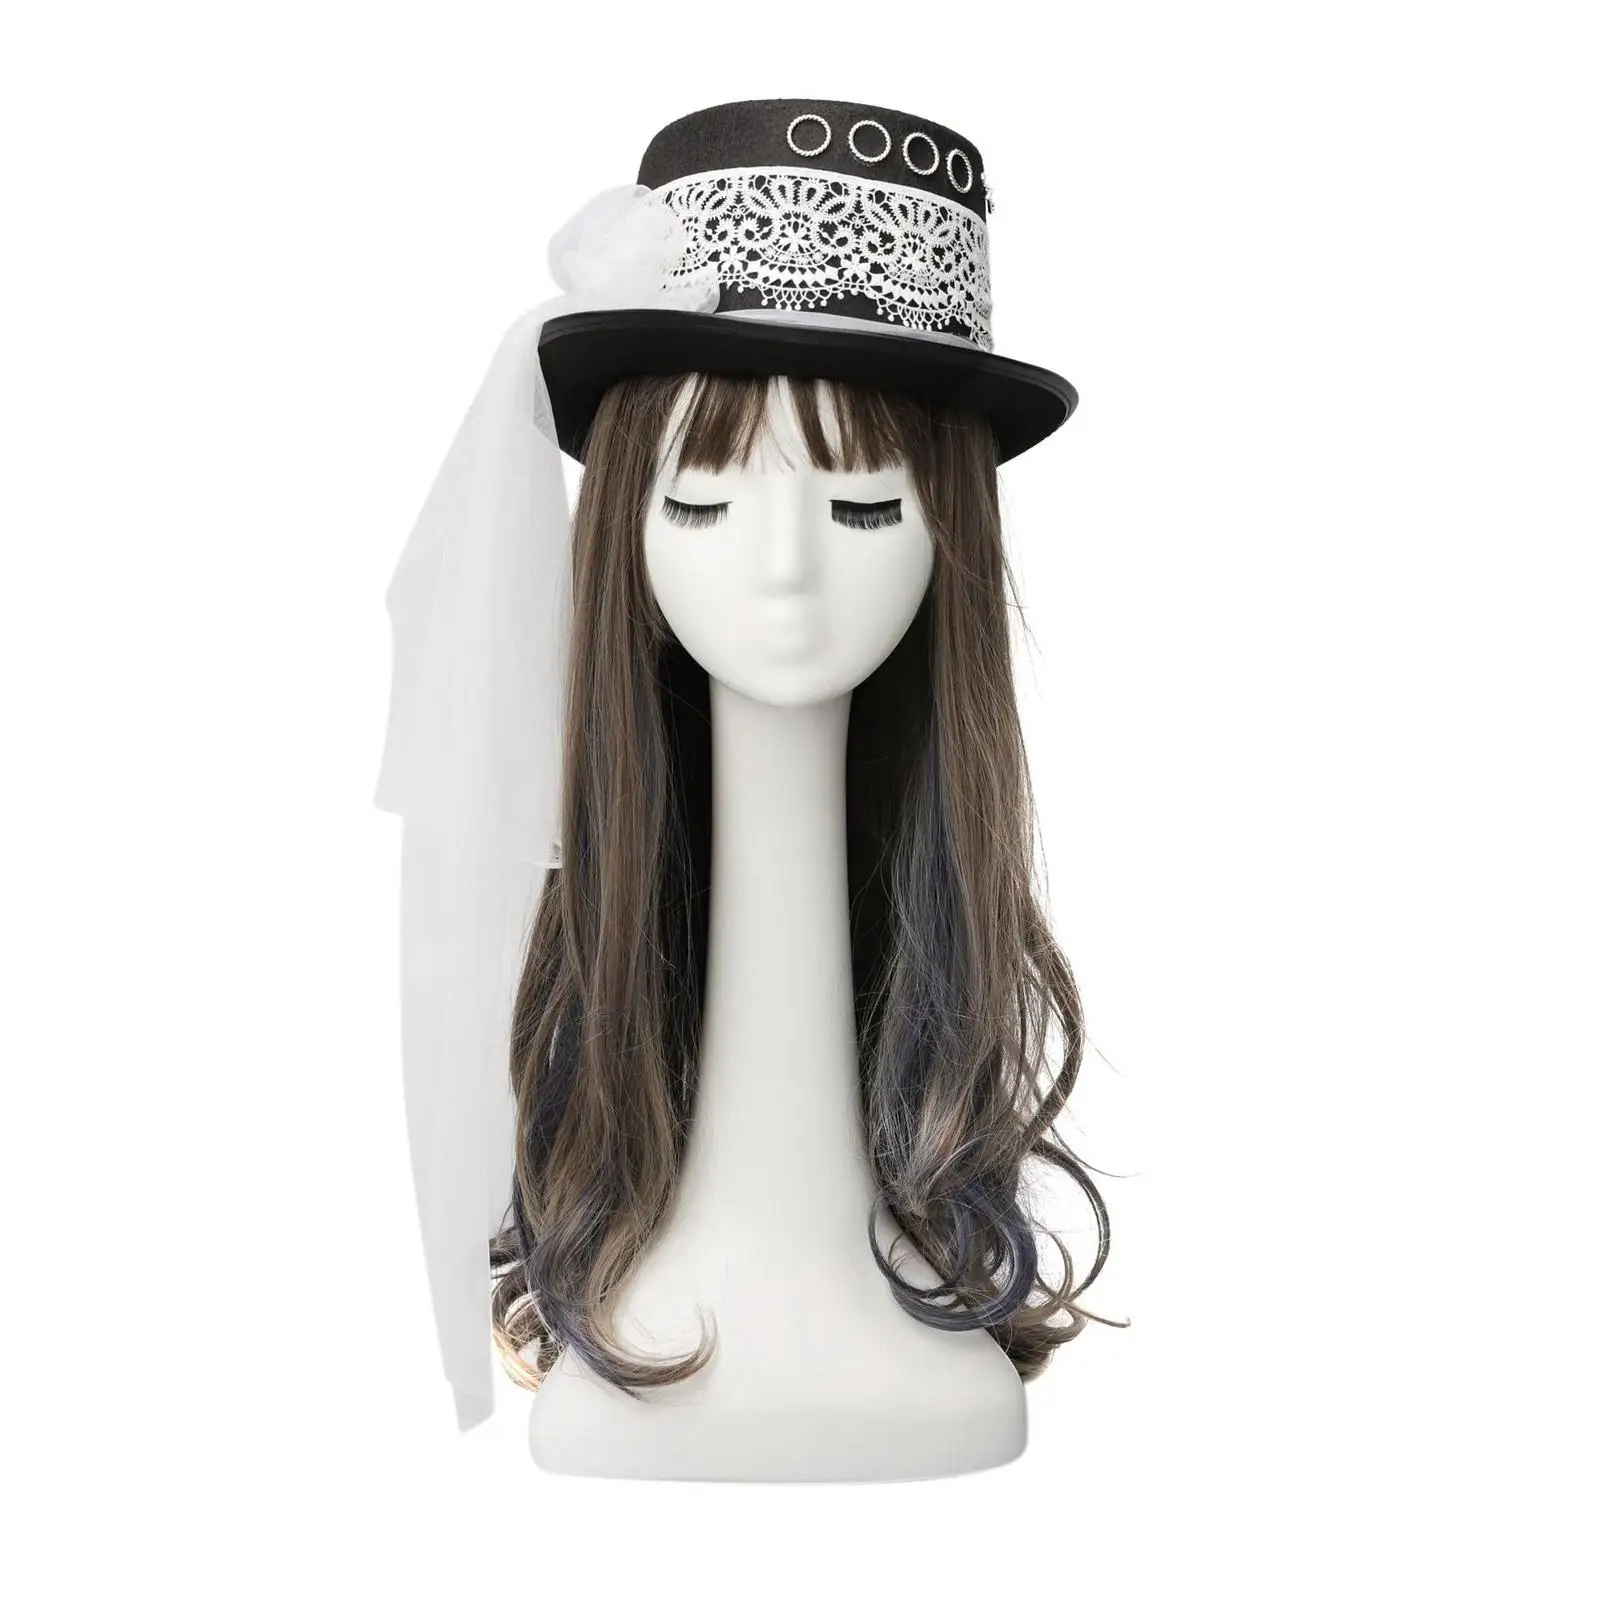 Goth Women Steampunk Top Hat White Lace Decor Veil Costume Hat,  Costume Accessory  Hat Durable Premium Material DIY 